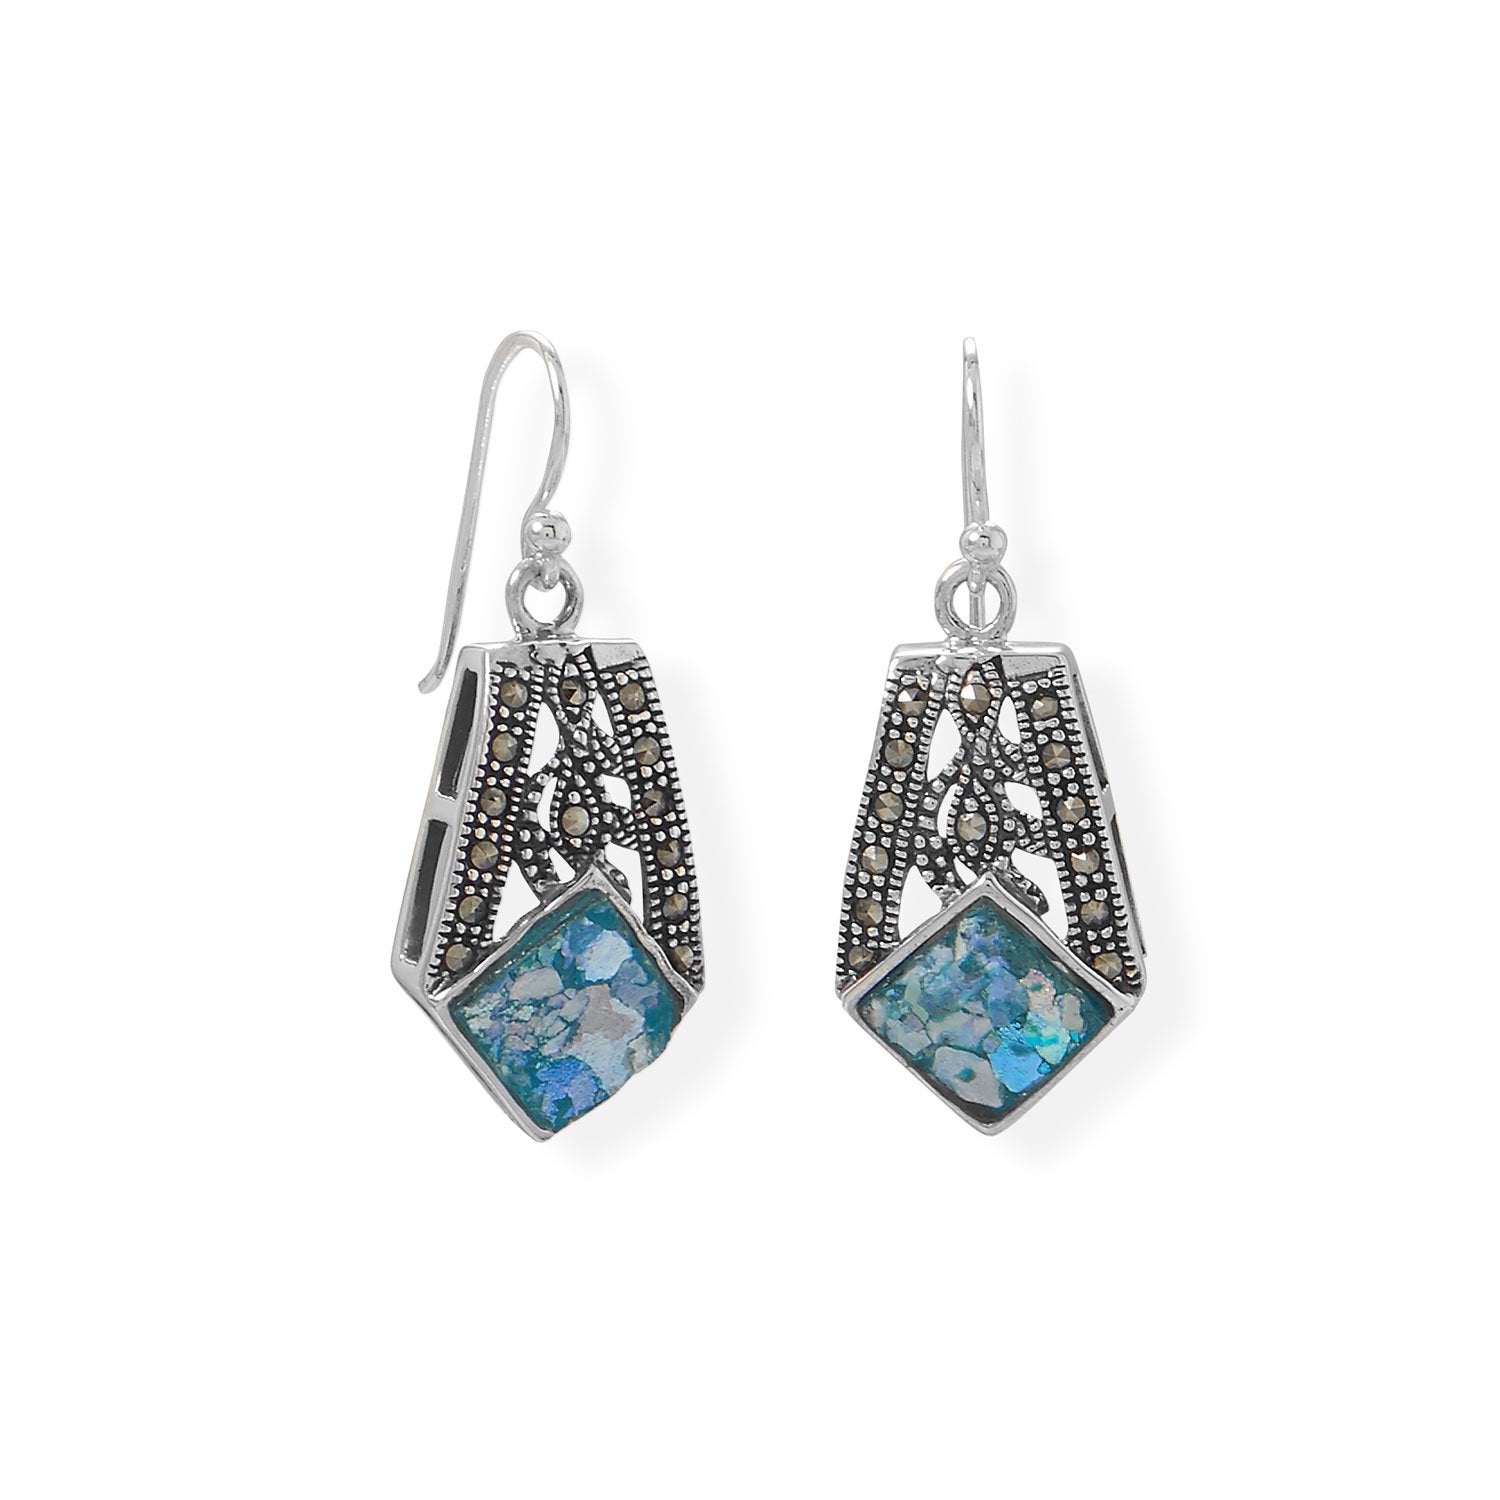 Oxidized Marcasite and Roman Glass Earrings - Joyeria Lady